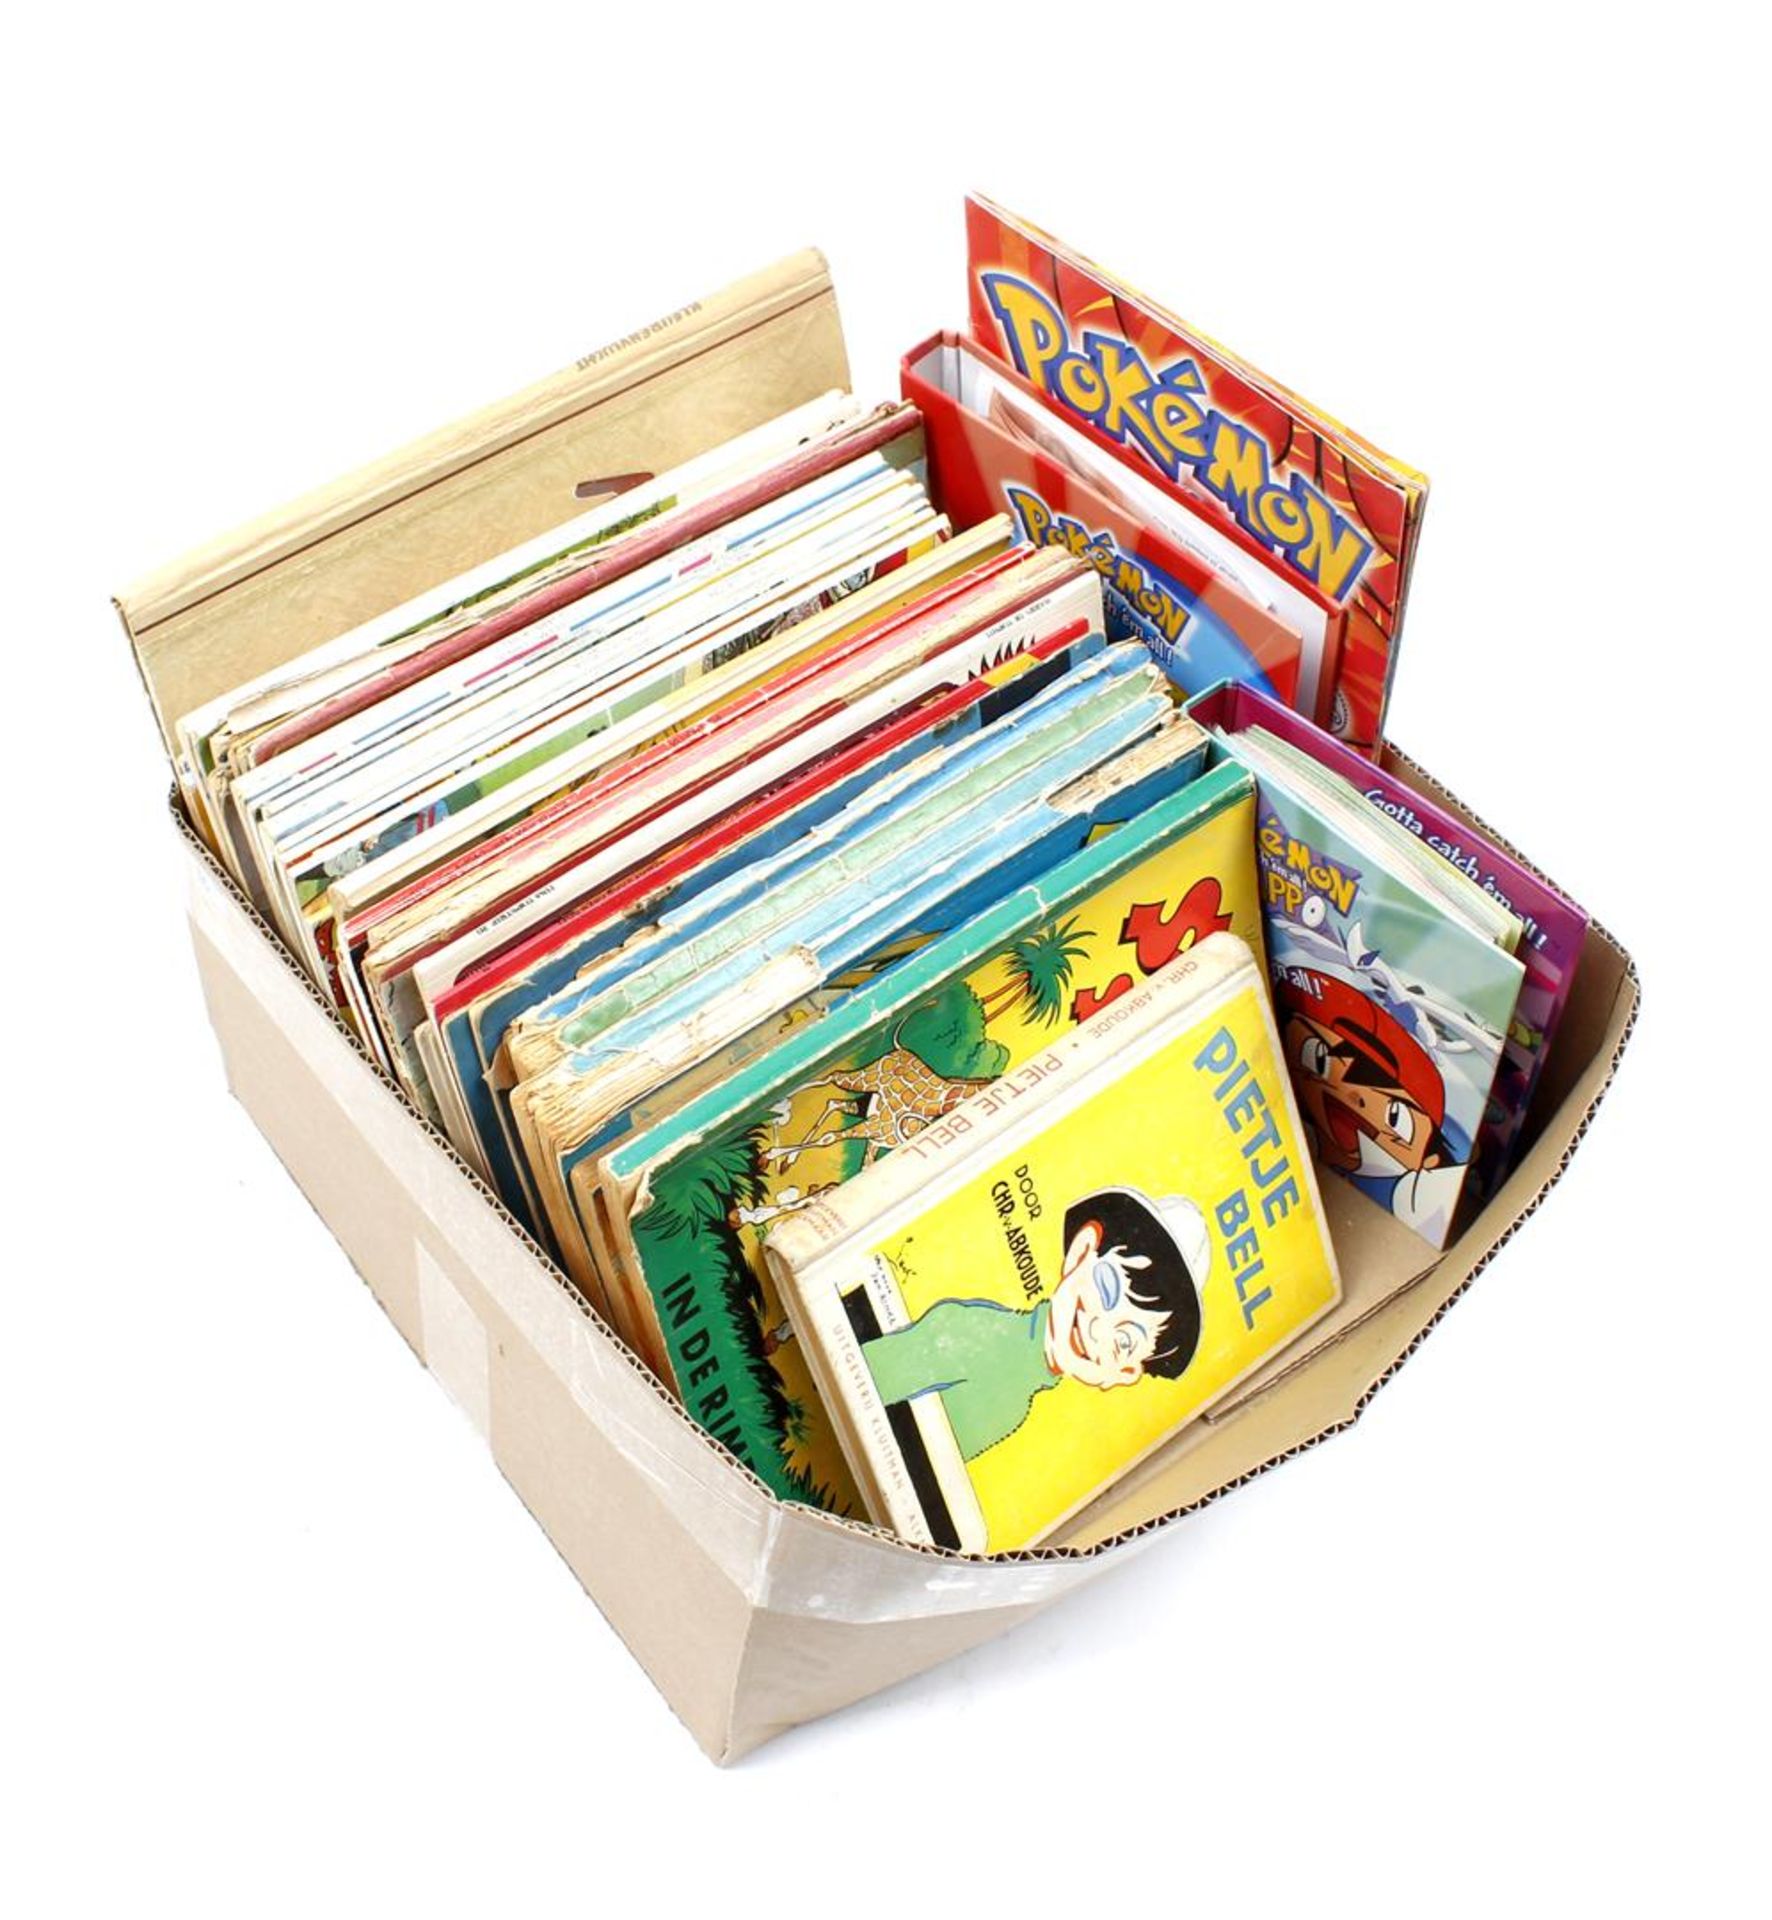 Box with children's books